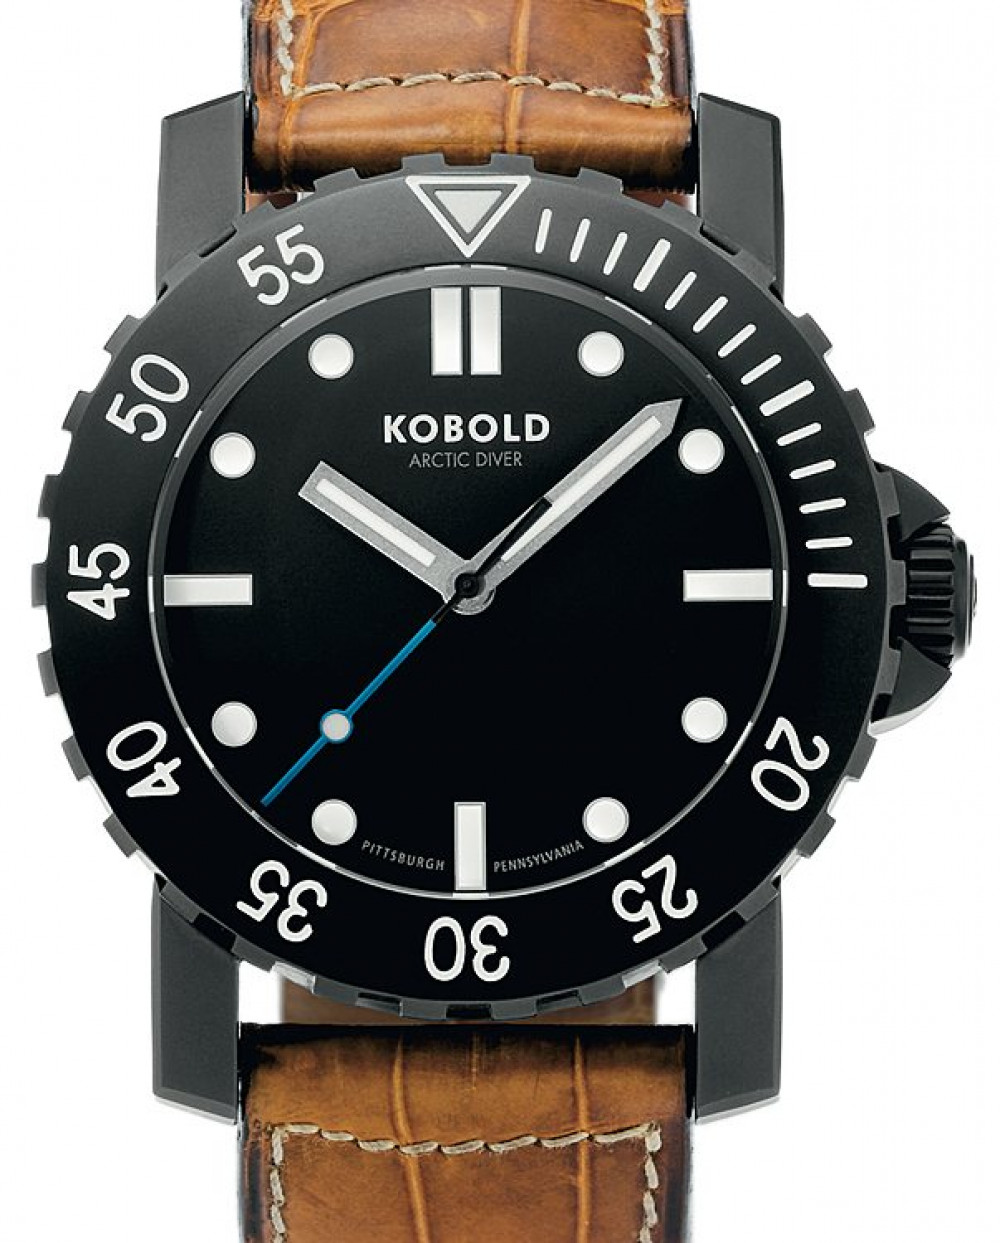 Zegarek firmy Kobold, model Arctic Diver Tactical USA